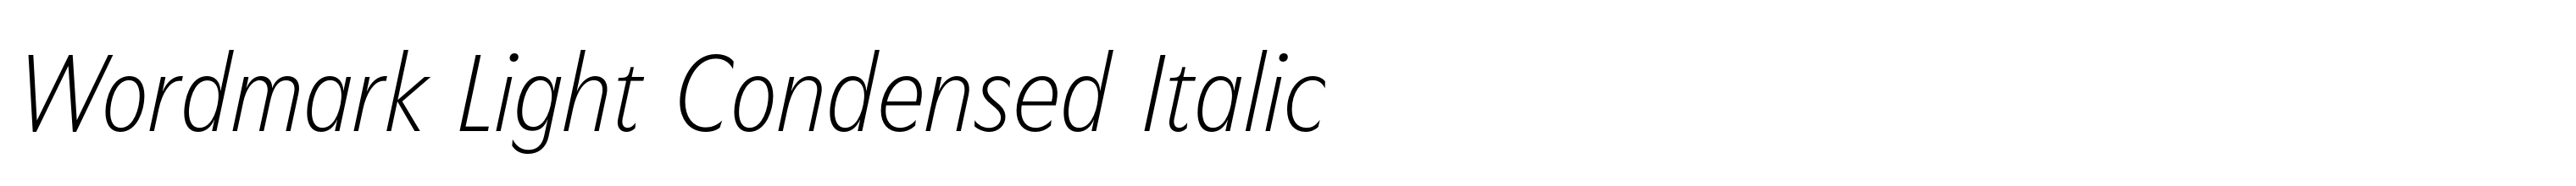 Wordmark Light Condensed Italic